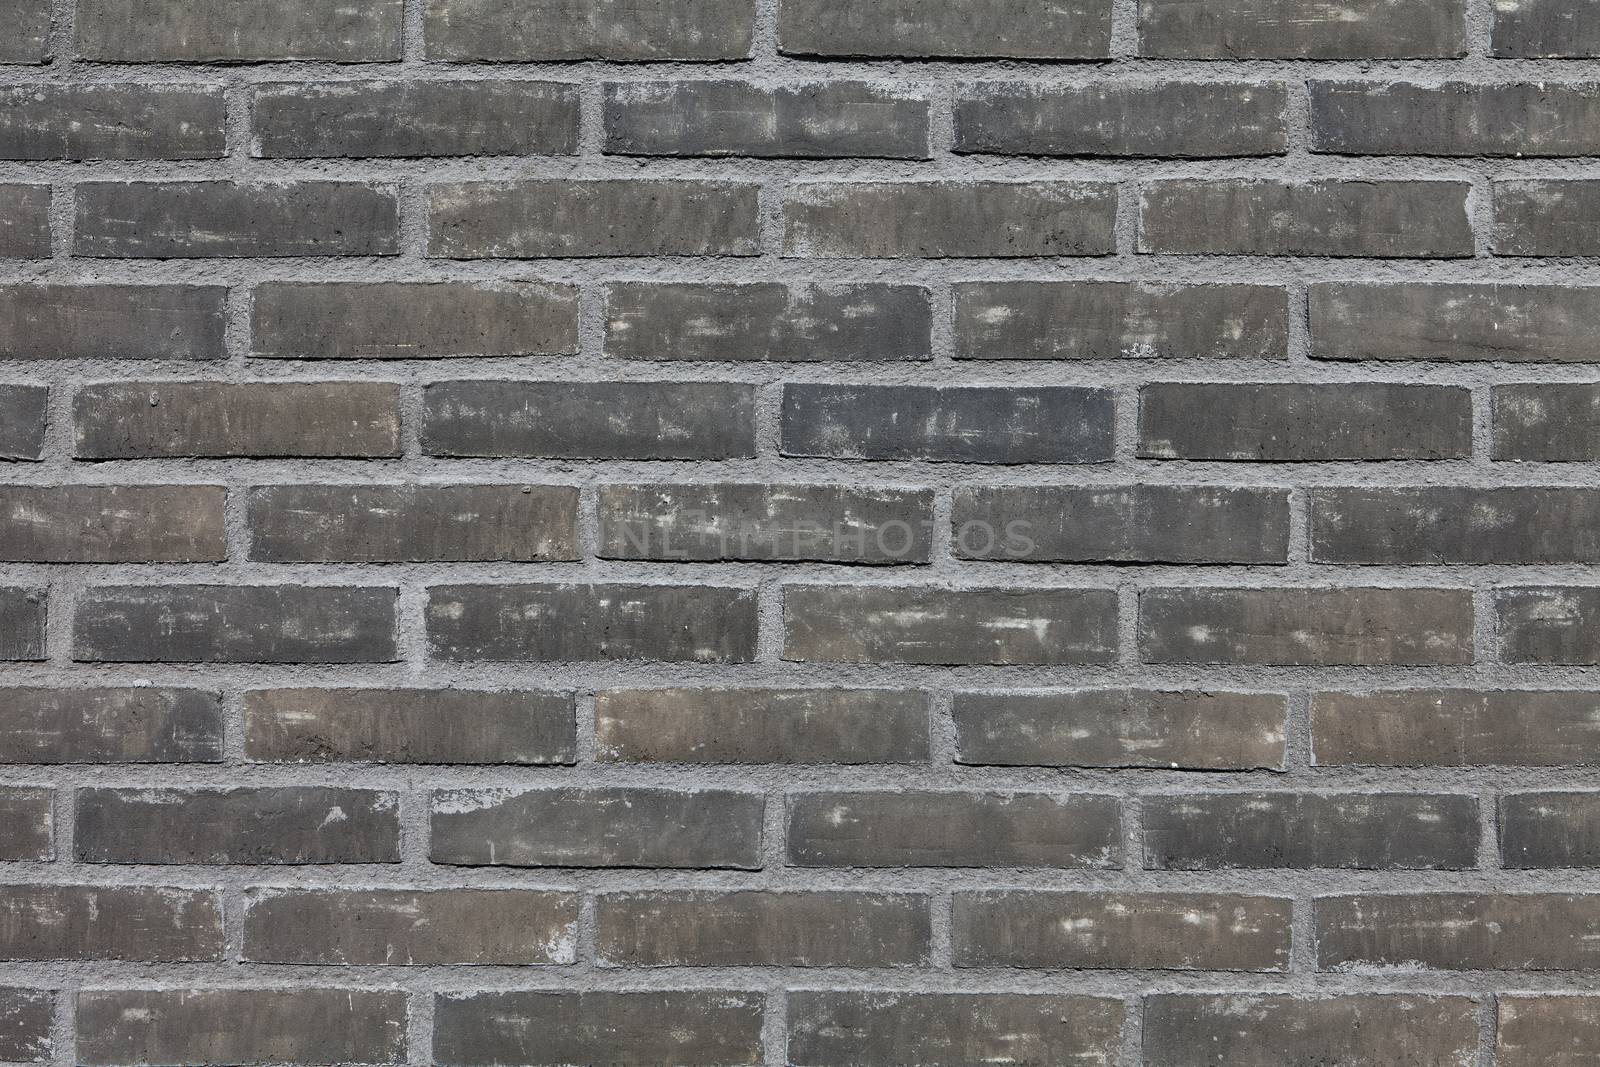 Brick Wall by gemenacom